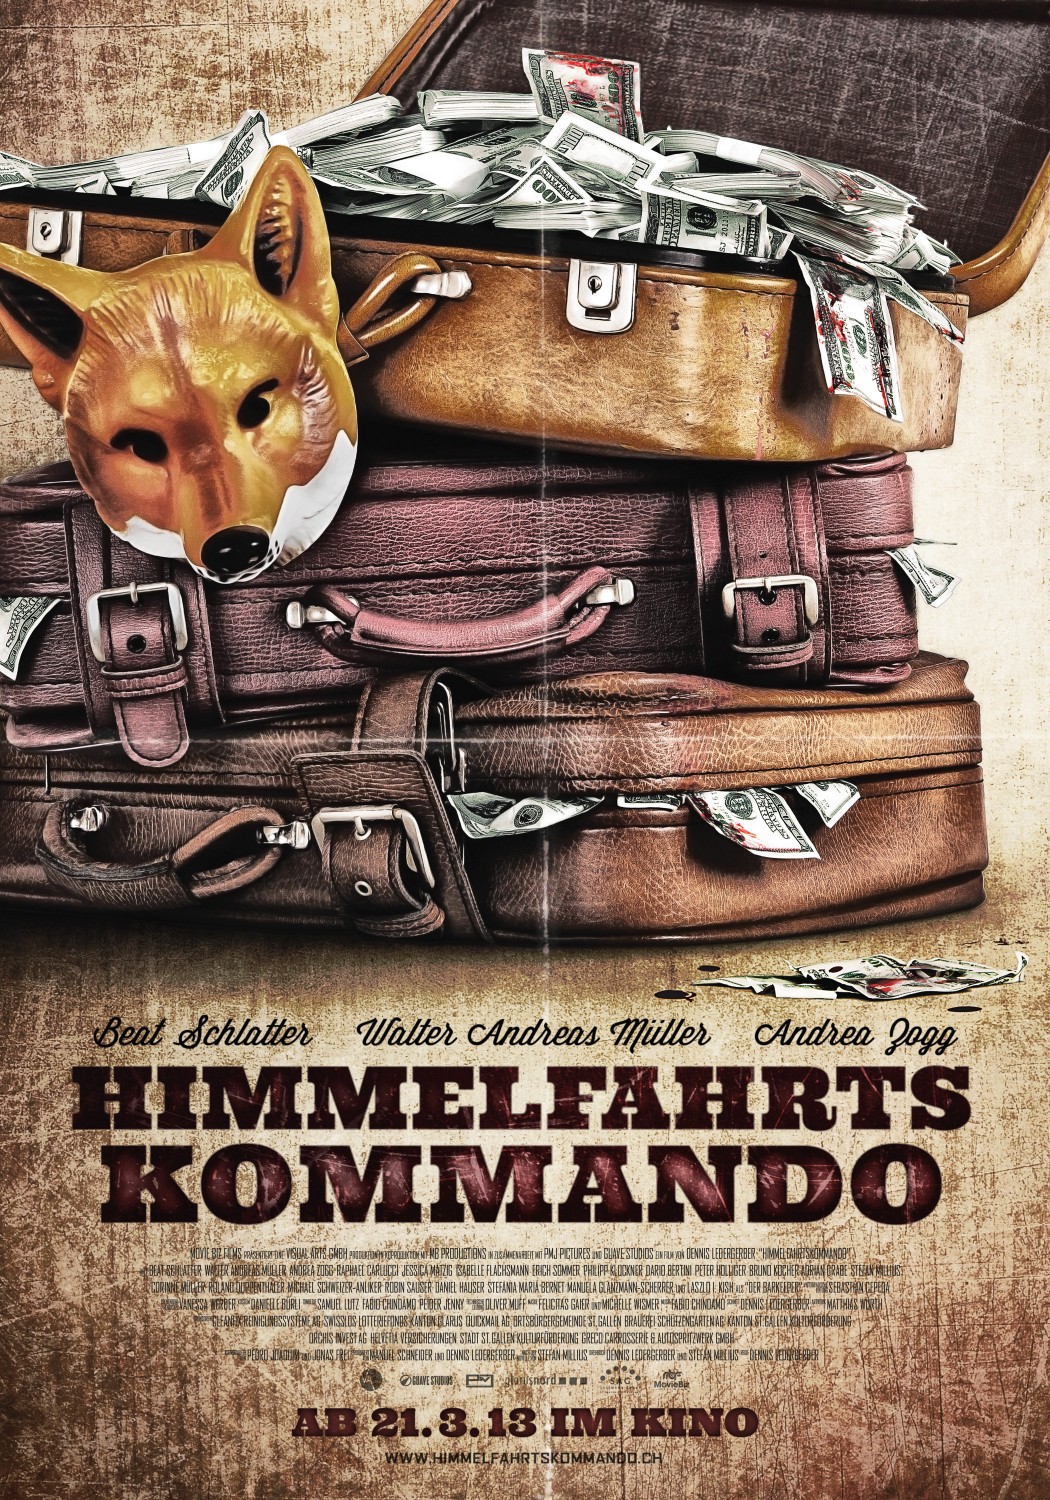 Extra Large Movie Poster Image for Himmelfahrtskommando 